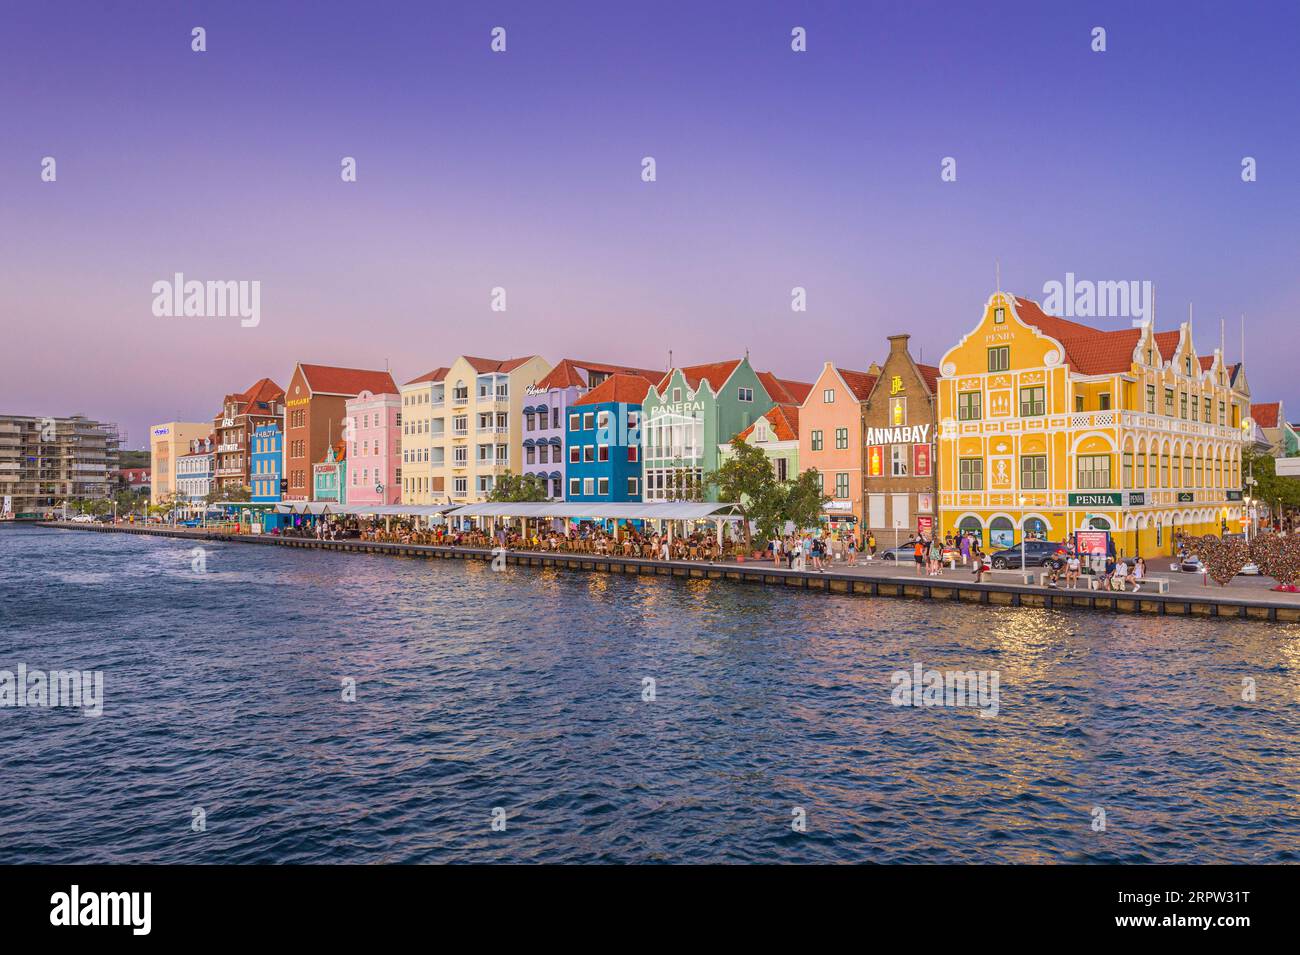 Willemstad, Curacao Hauptstadt der niederländischen Karibikinsel Curacao Stockfoto